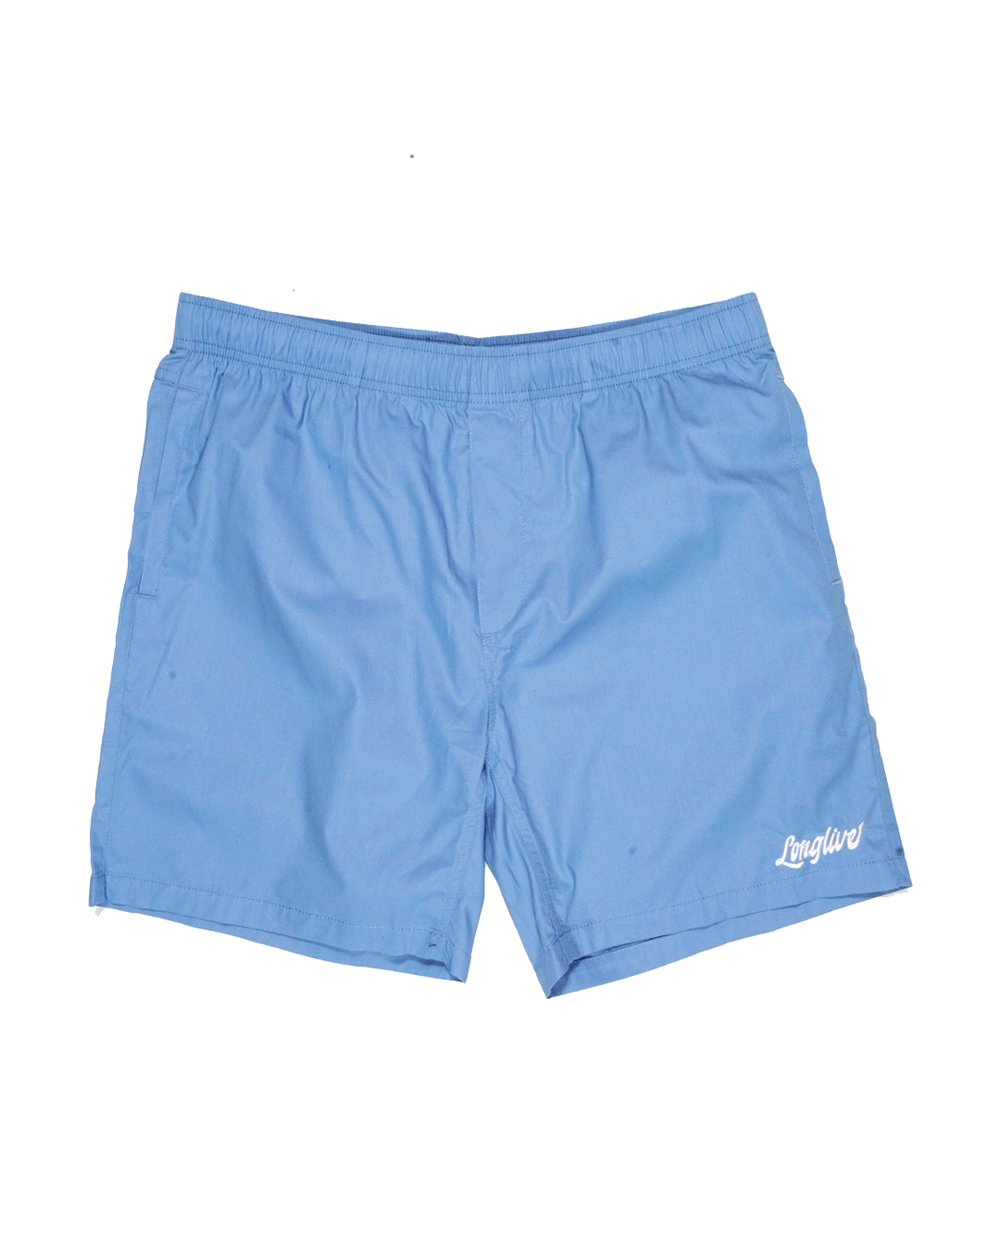 Image of Long Live Beach Shorts - Carolina Blue